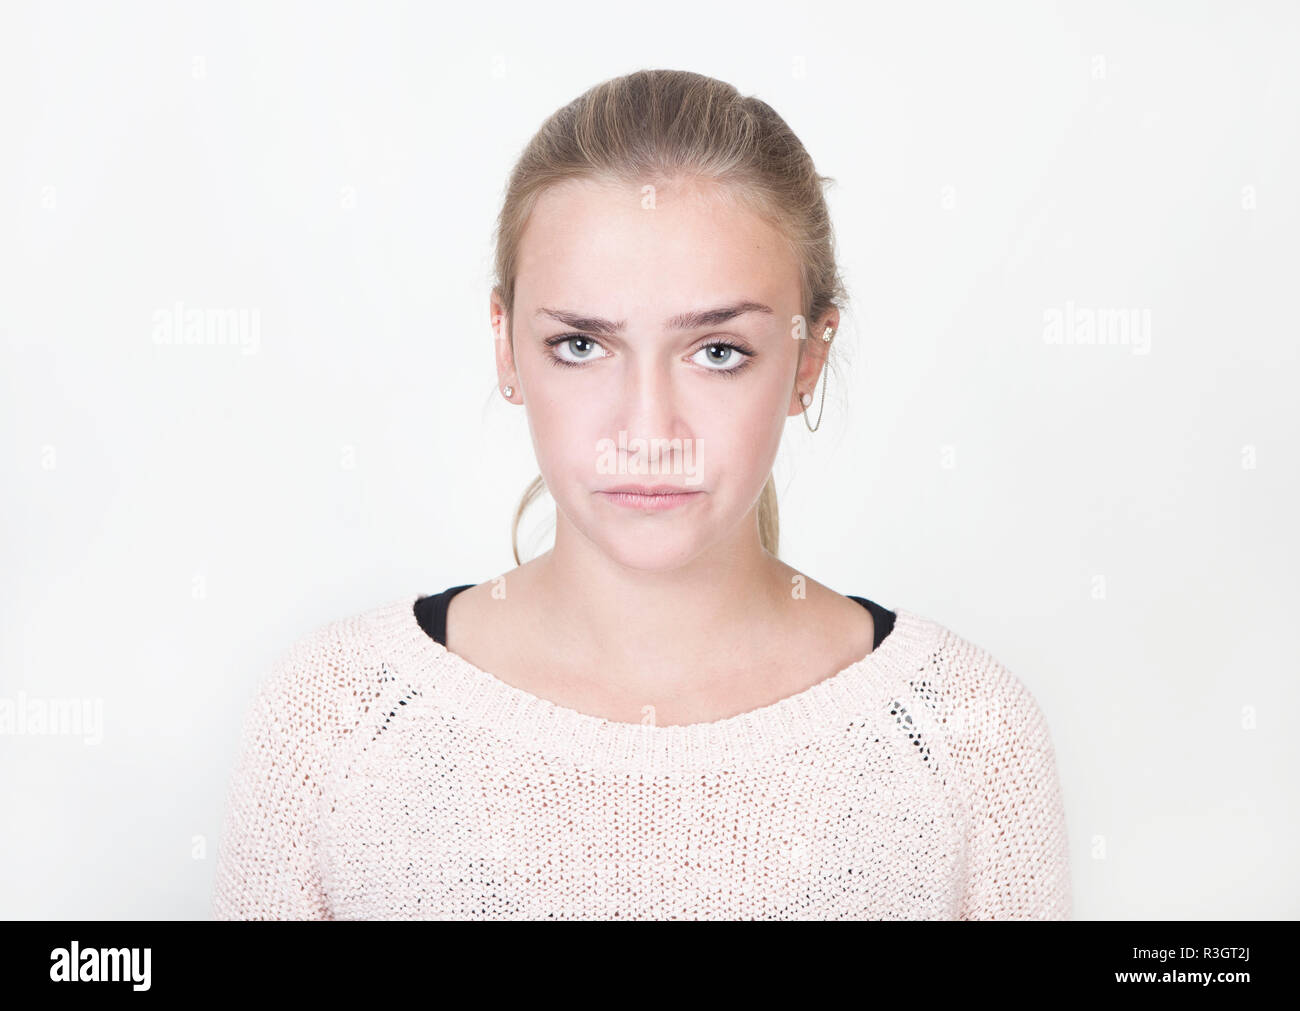 girl looks annoyed portrait Stock Photo